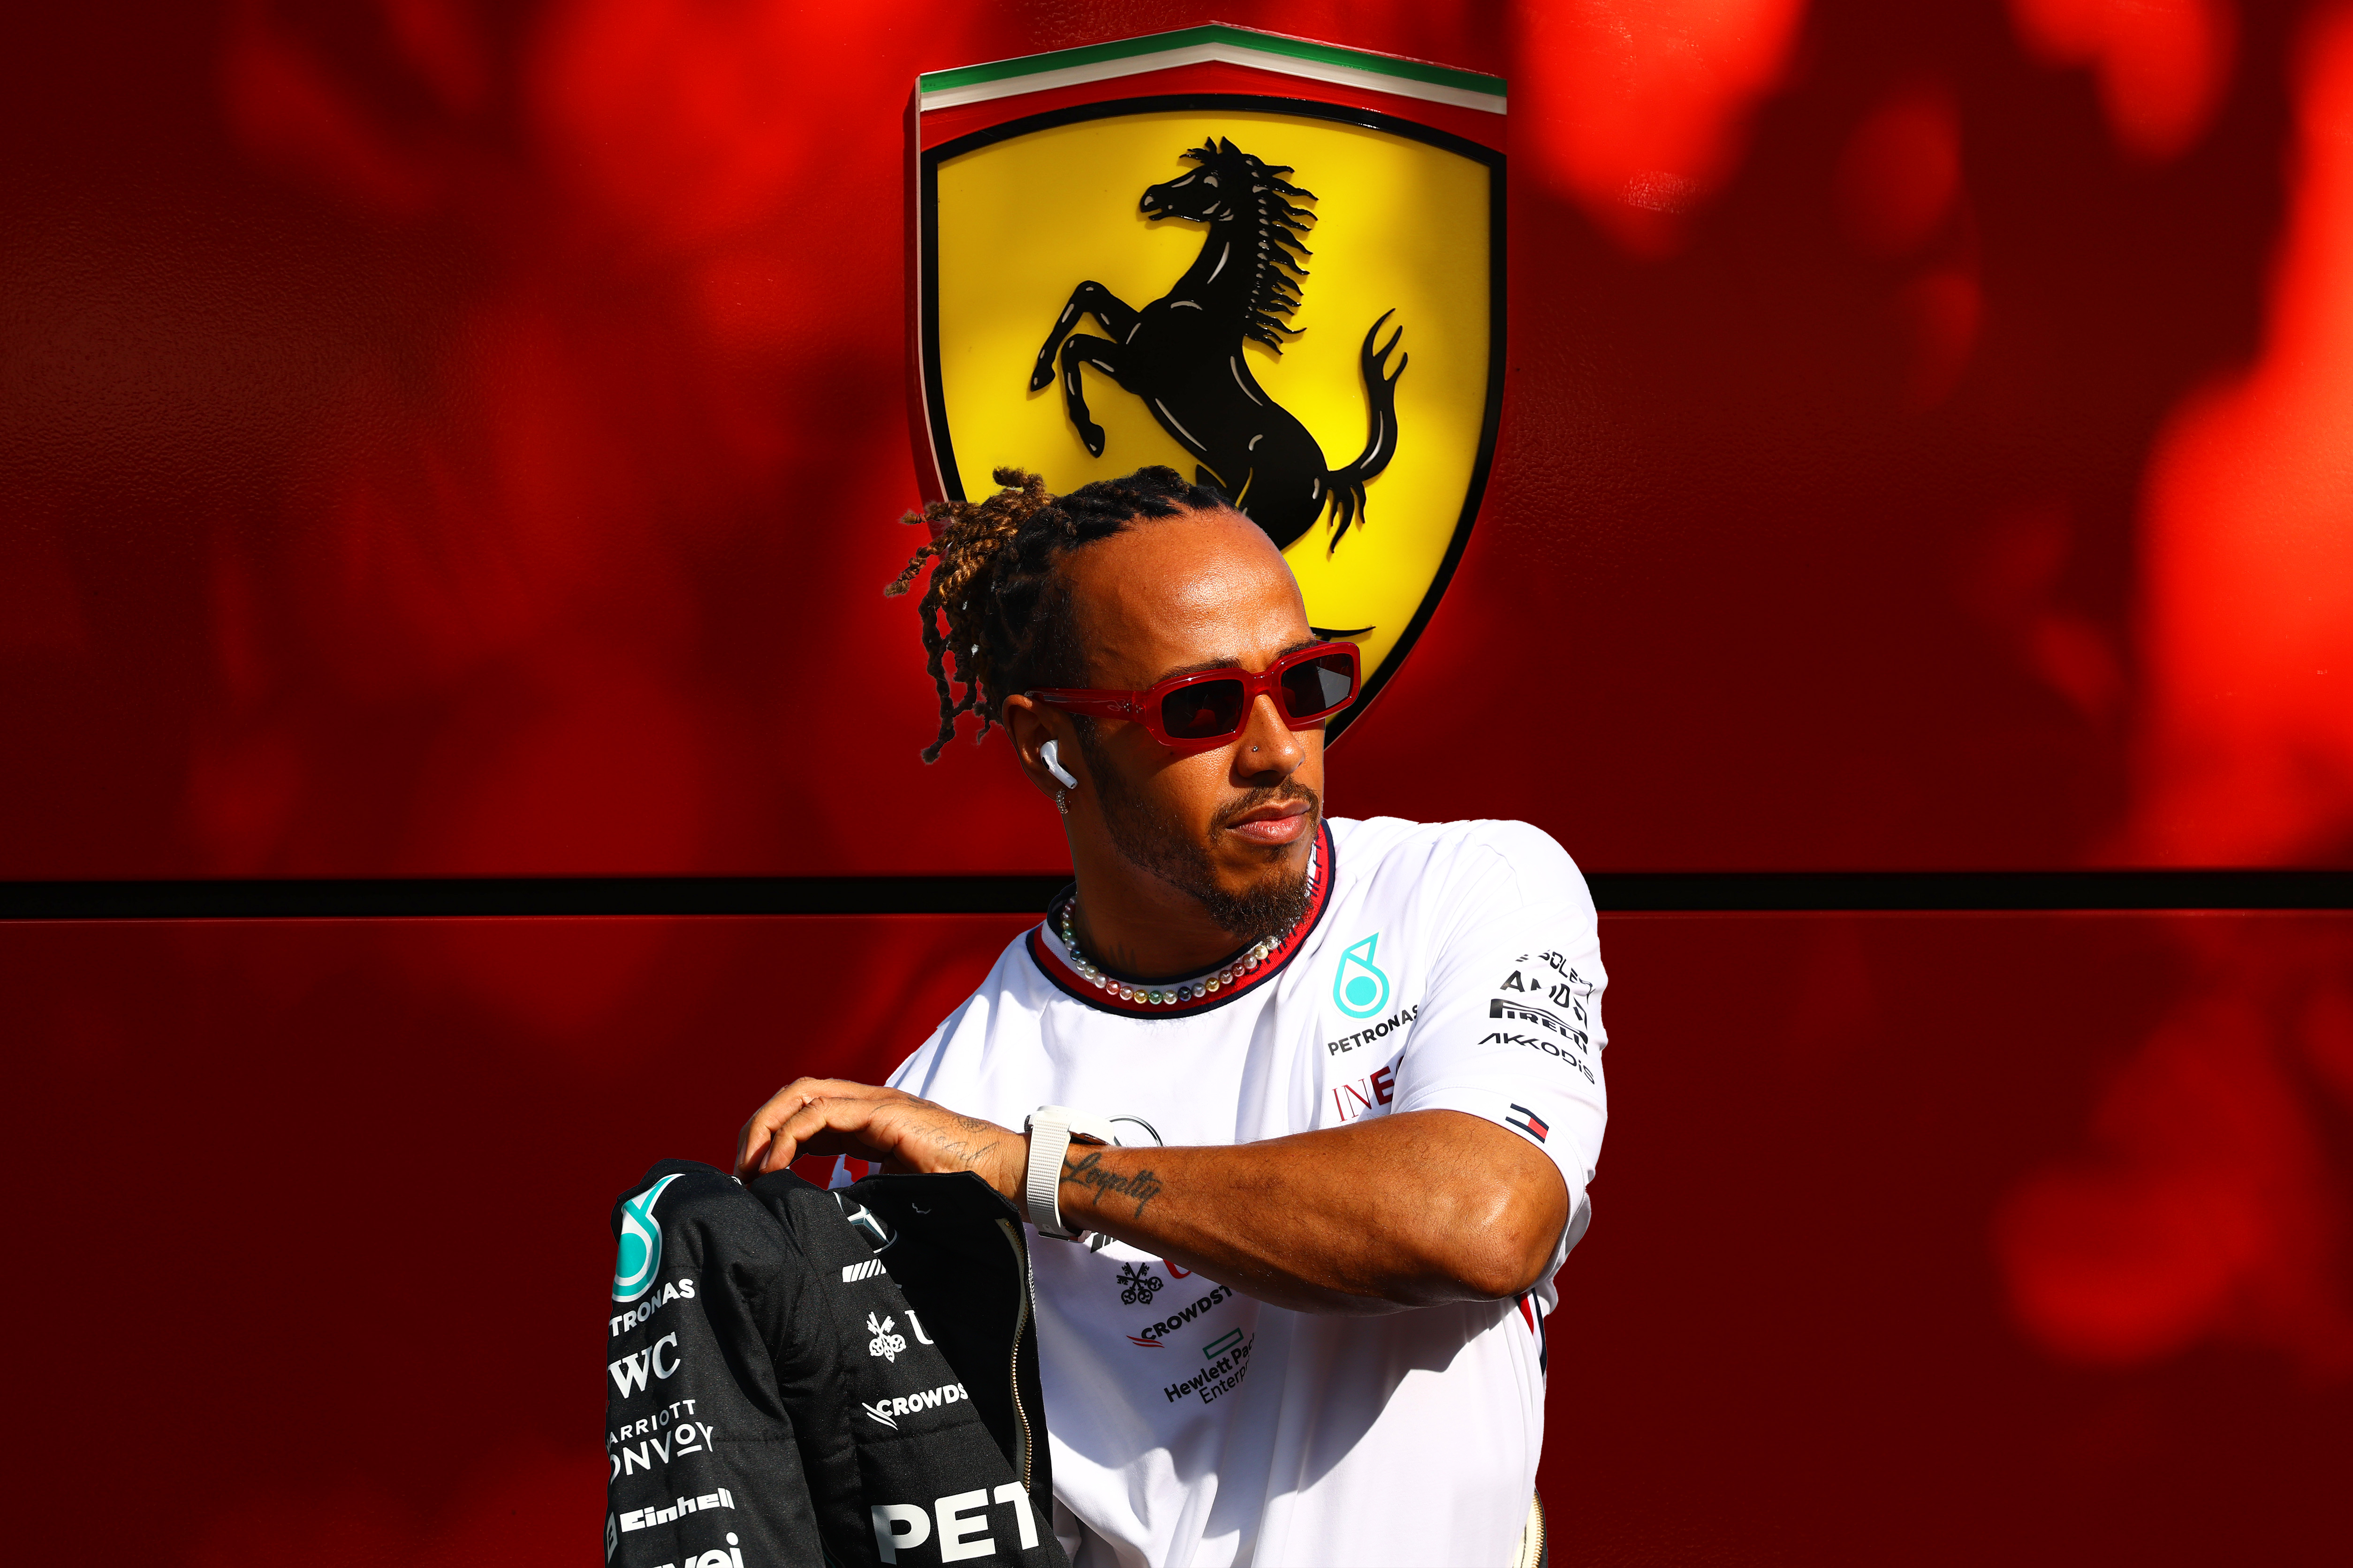 Lewis Hamilton is leaving Mercedes to join rivals Ferrari